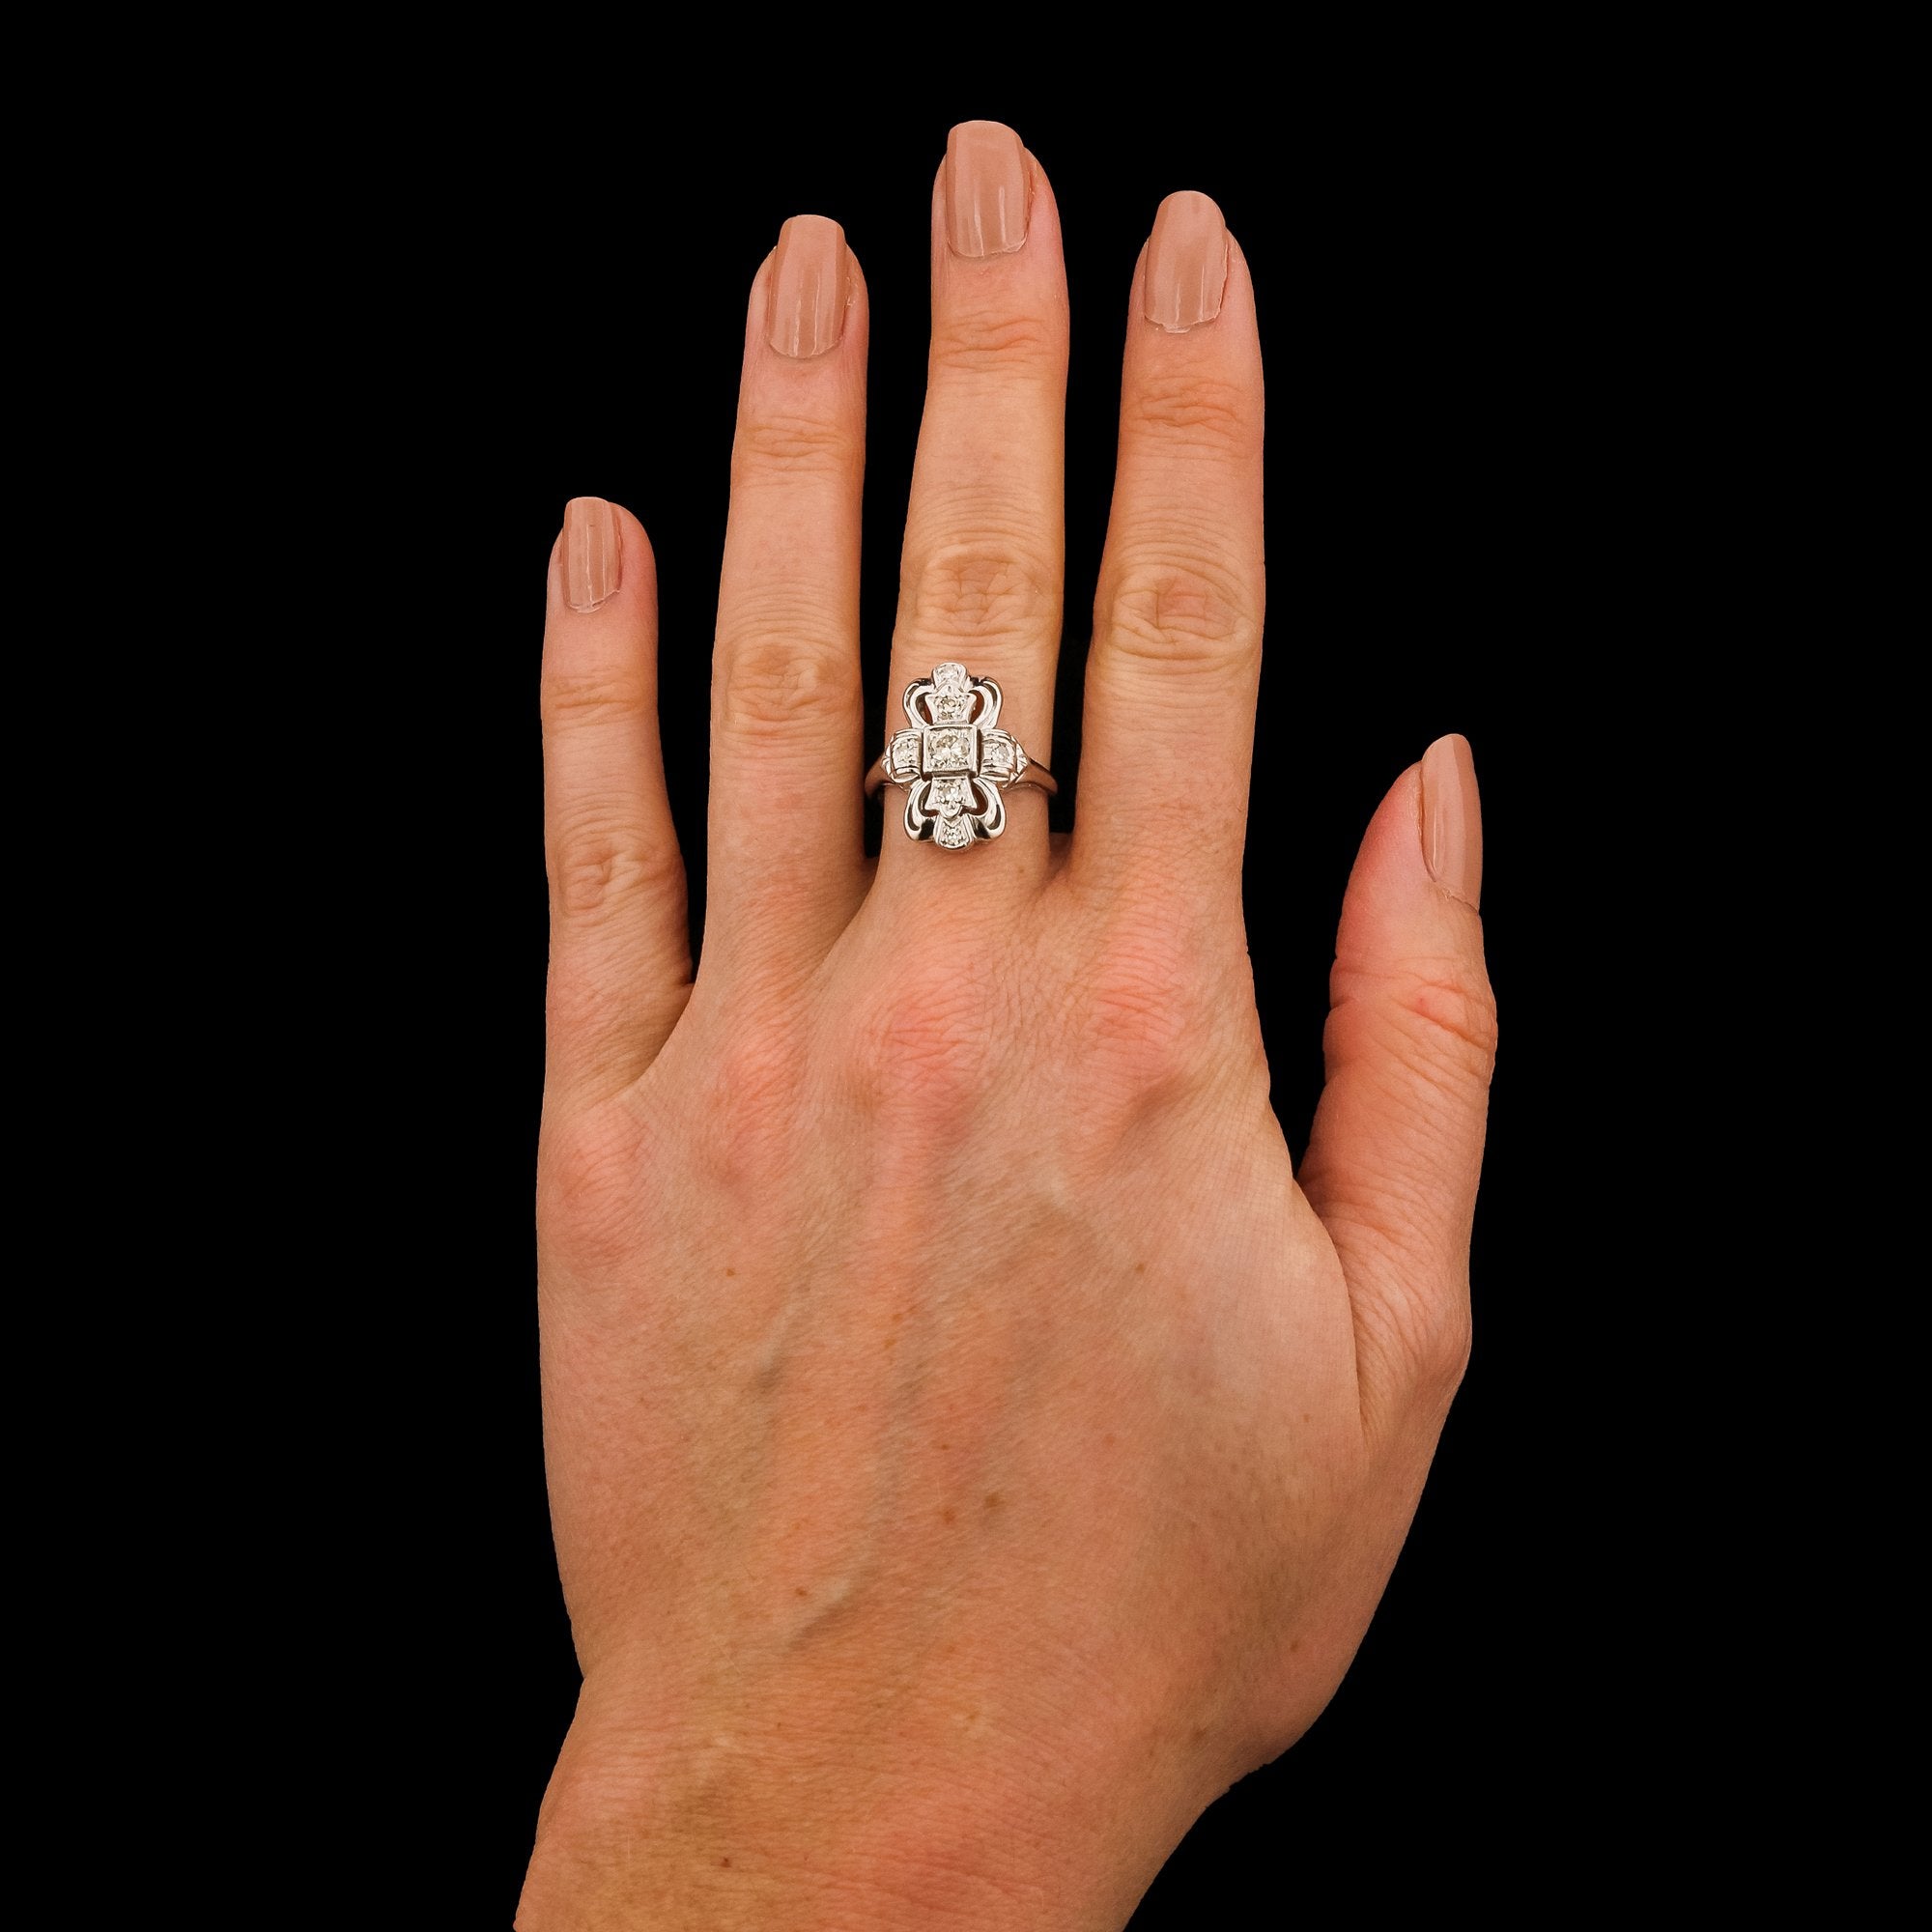 Vintage 14K White Gold Diamond Ring